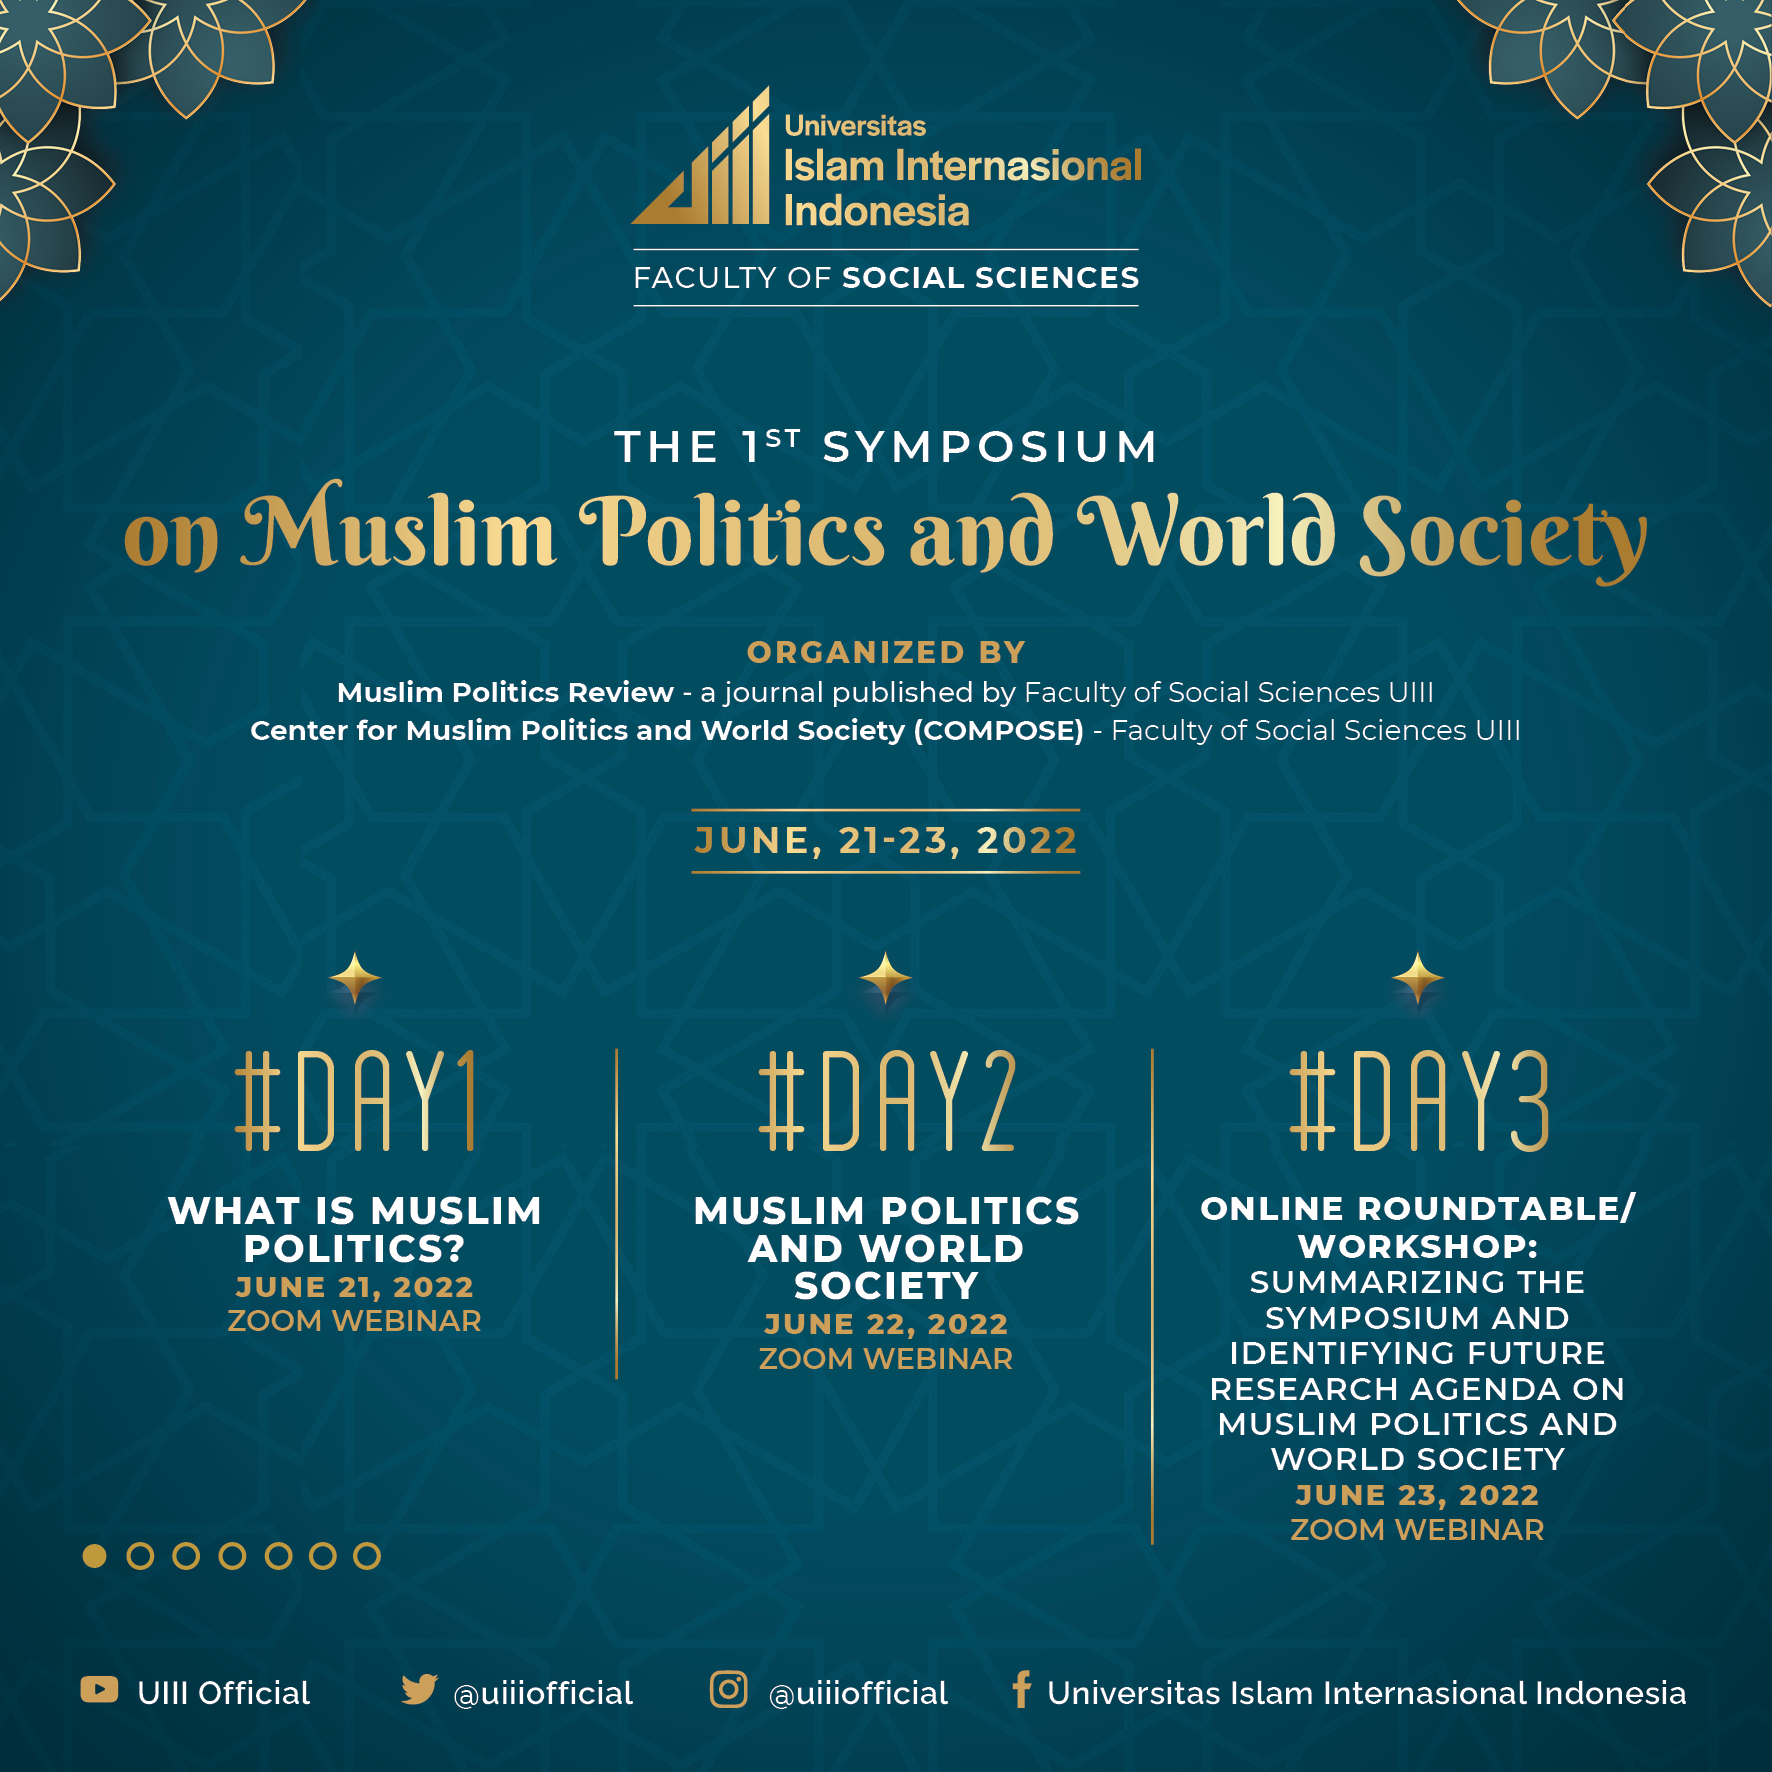 The 1st Symposium on Muslim Politics and World Society